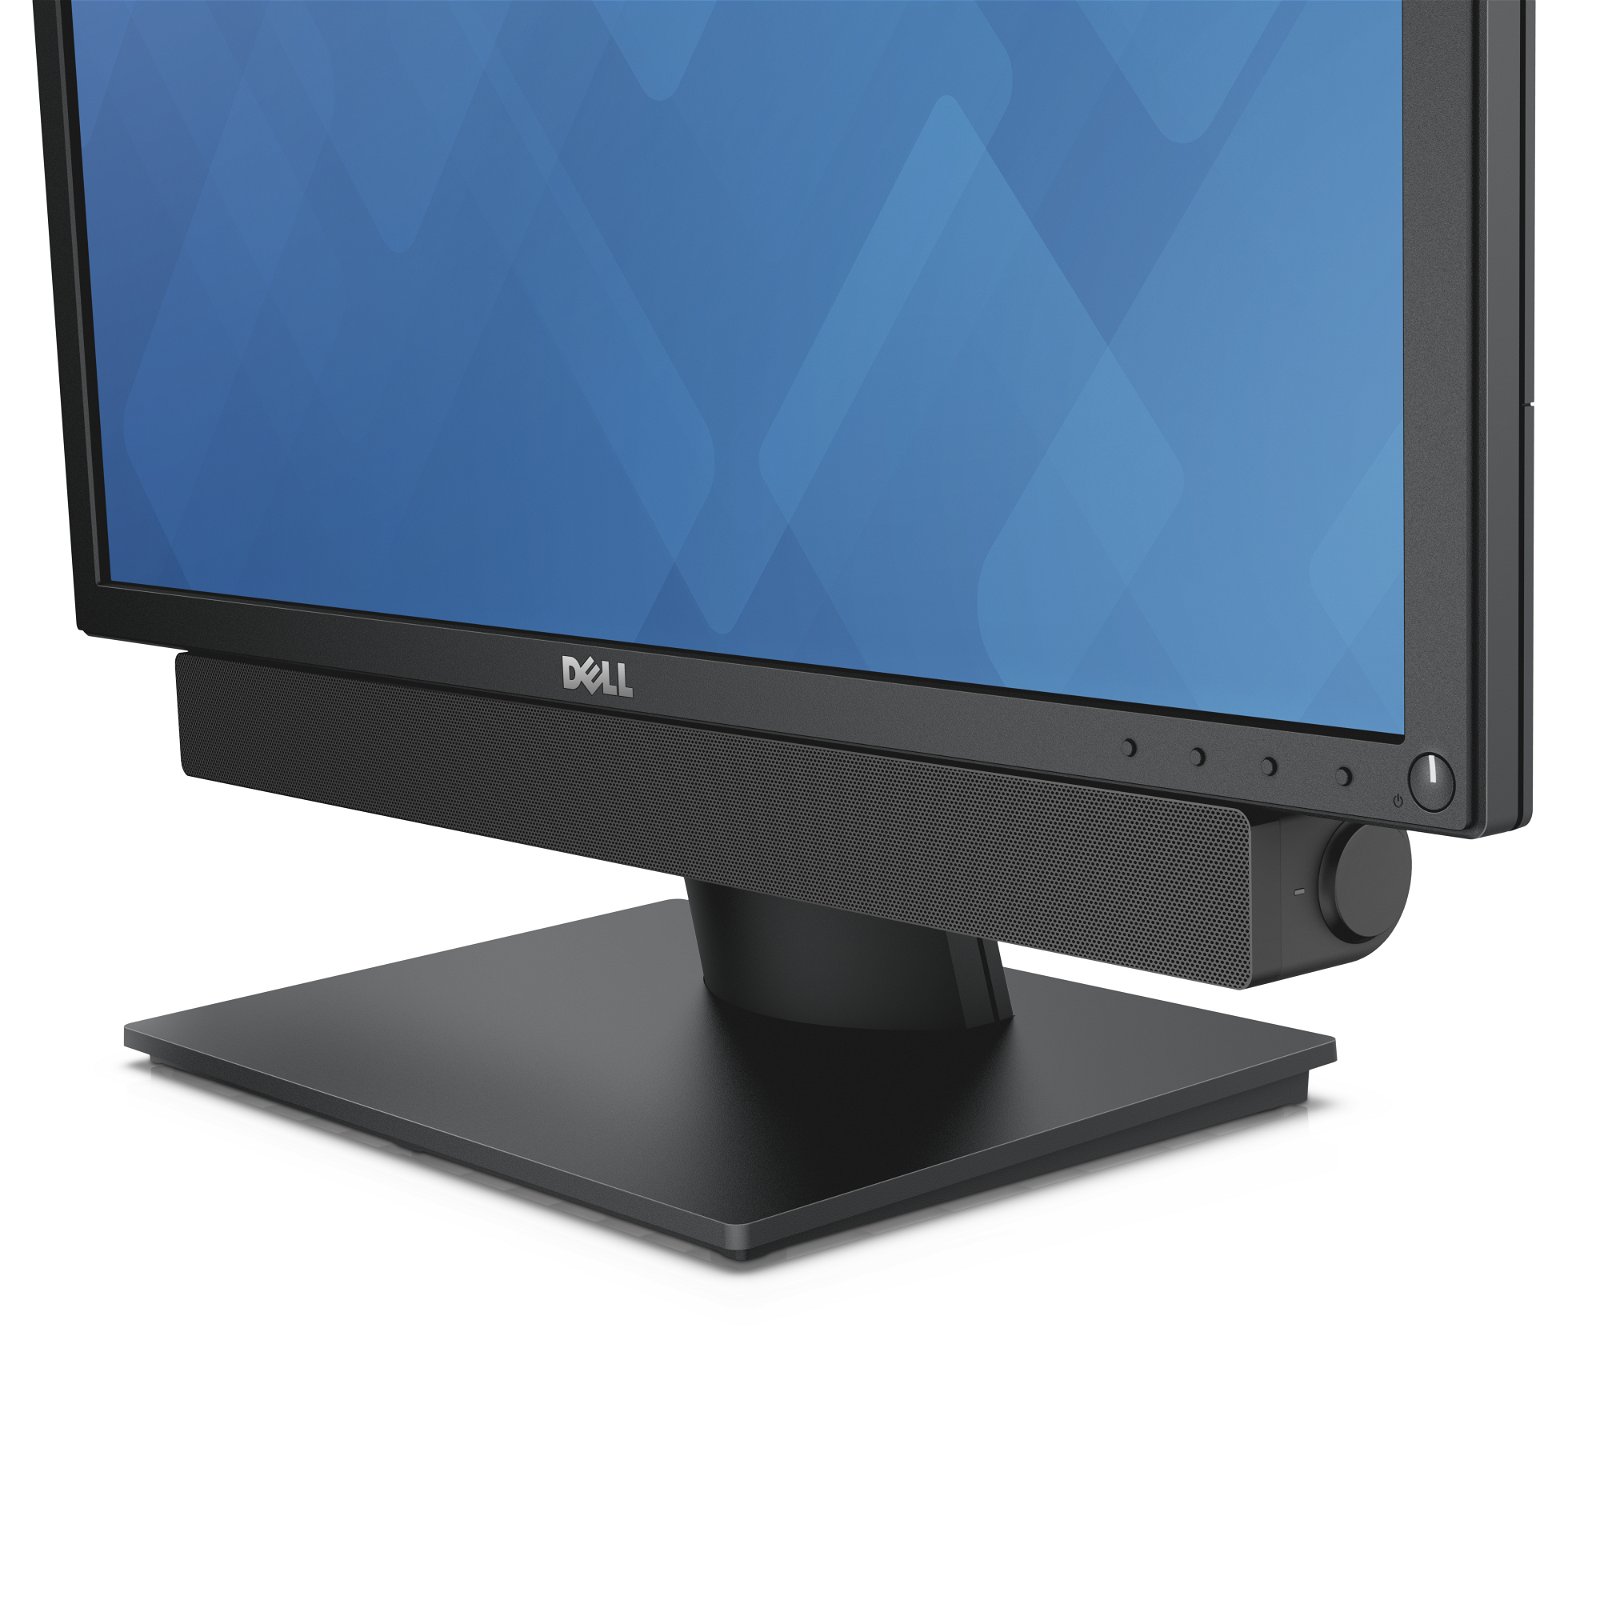 LED, 200, CD/m² 1000:1, 5 ms Monitor de 22 Full HD Dell E2216HV Color Negro 